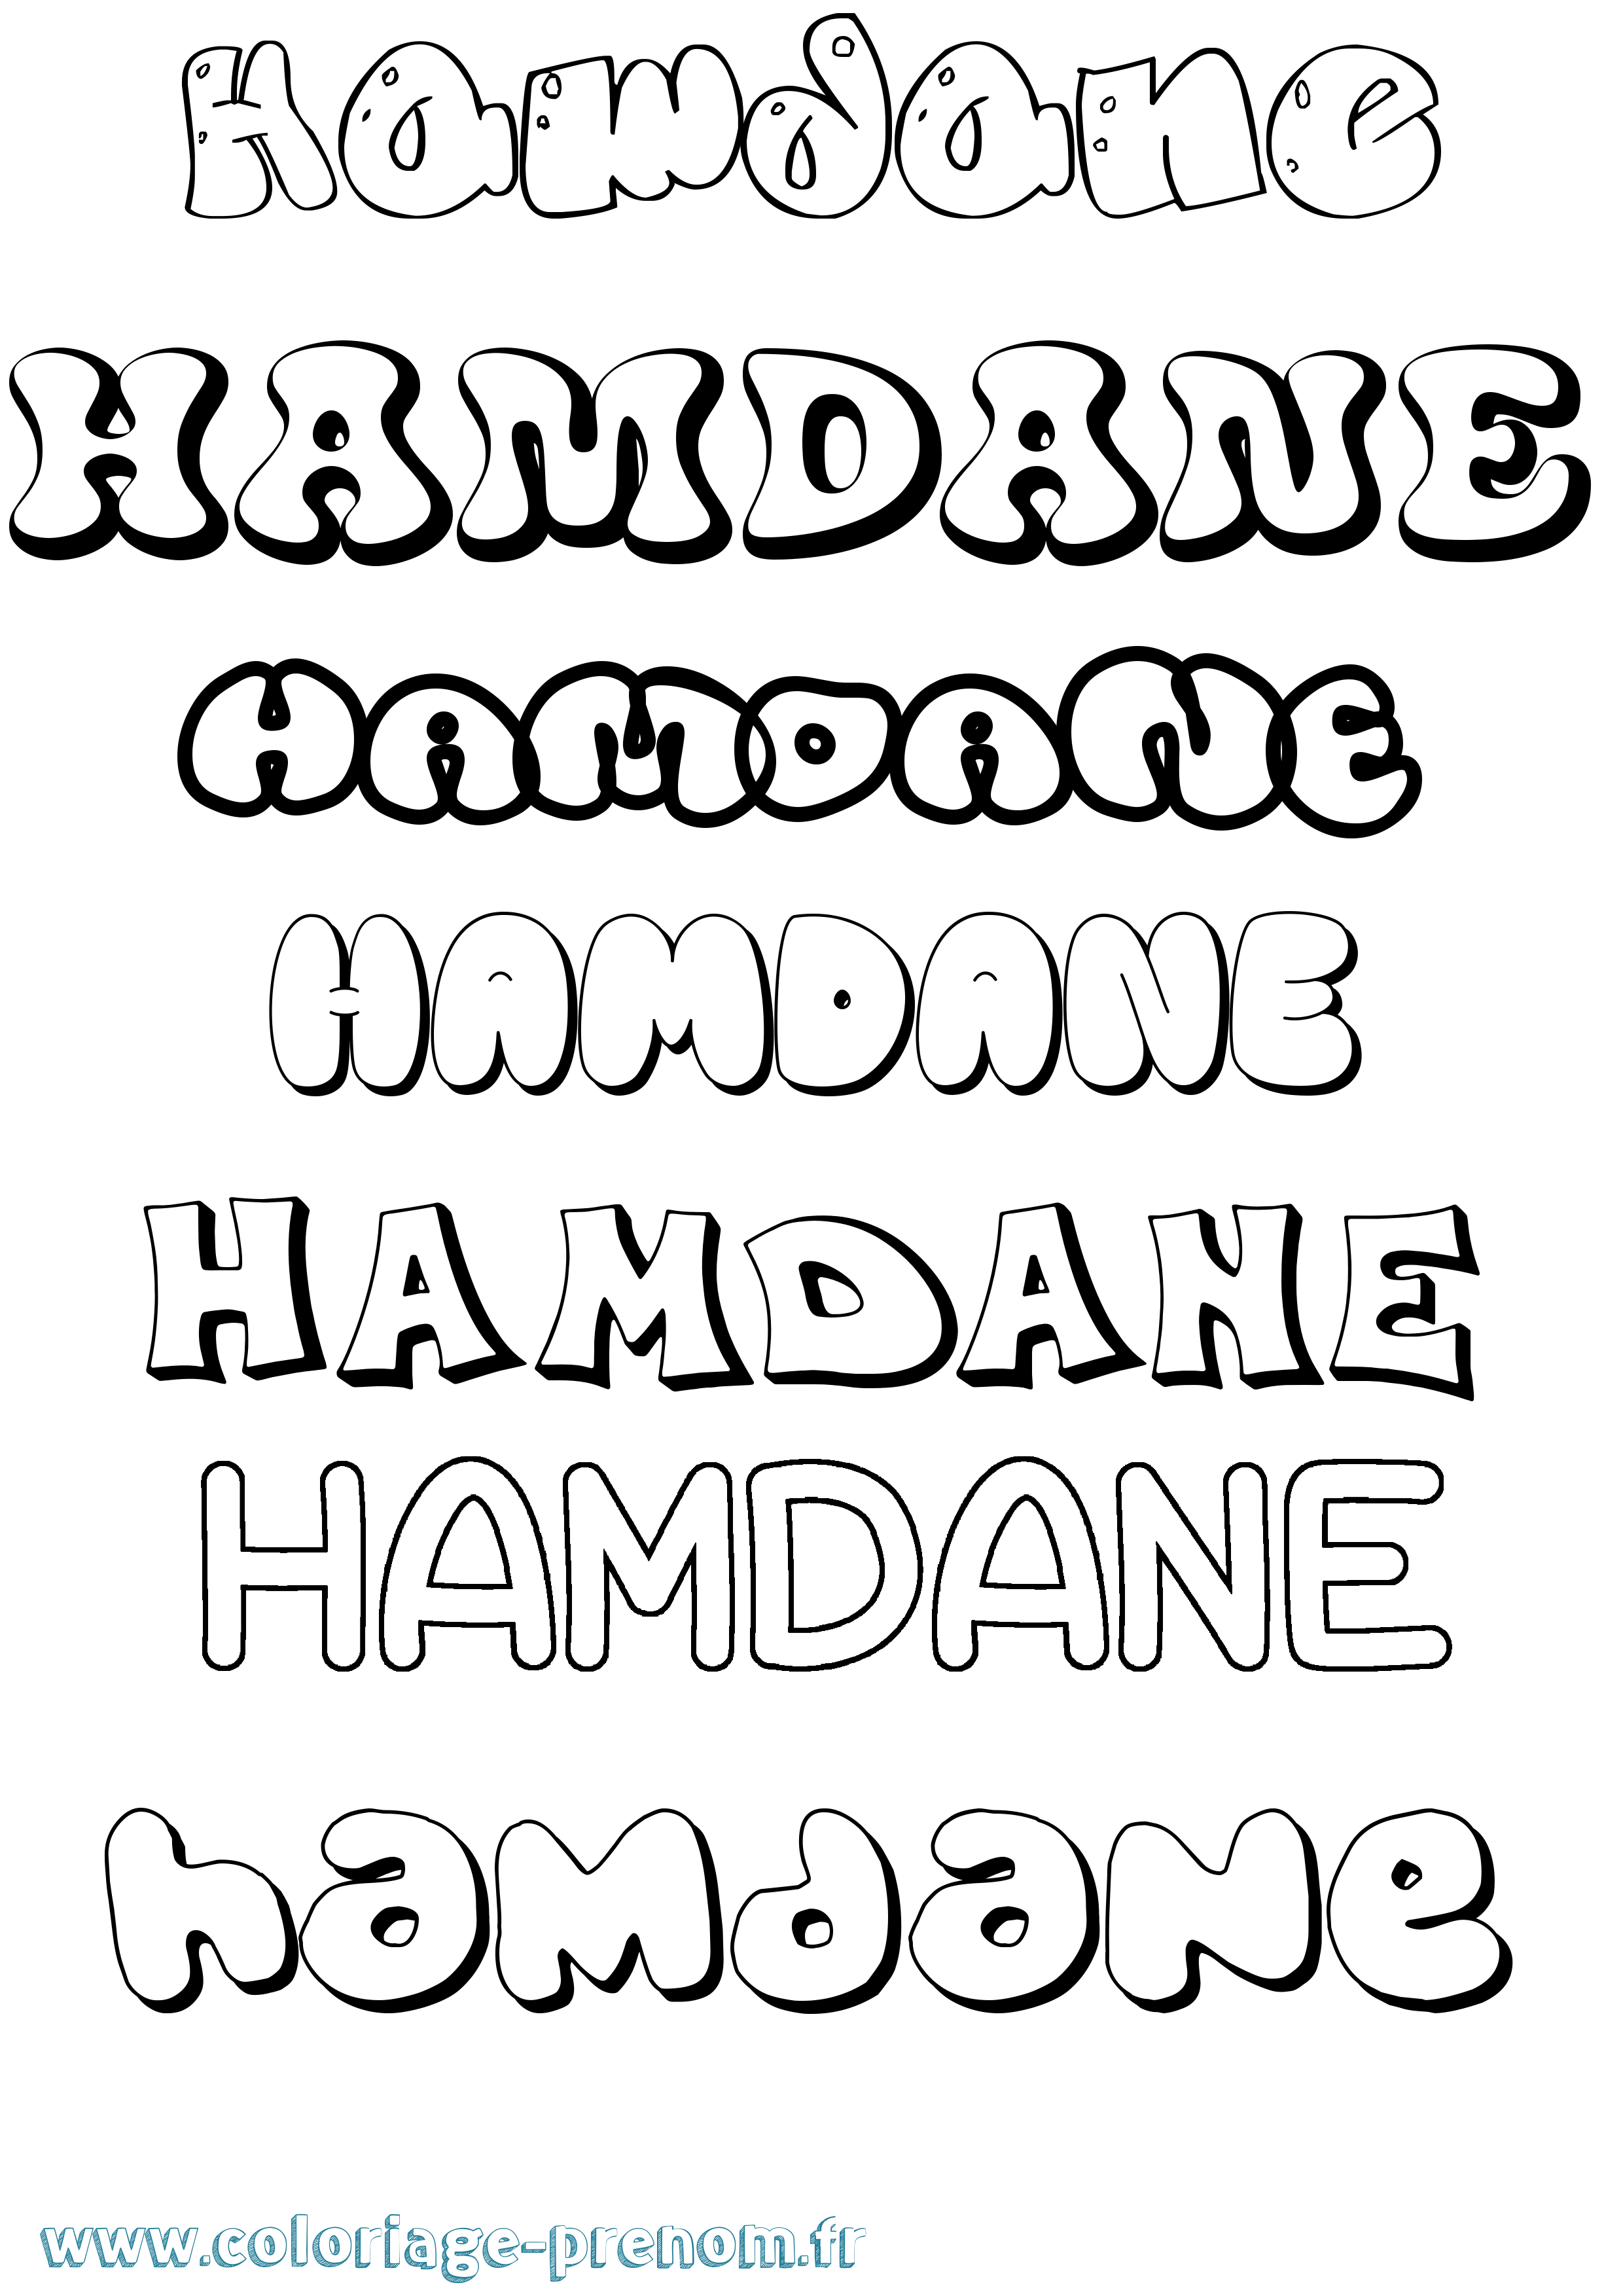 Coloriage prénom Hamdane Bubble